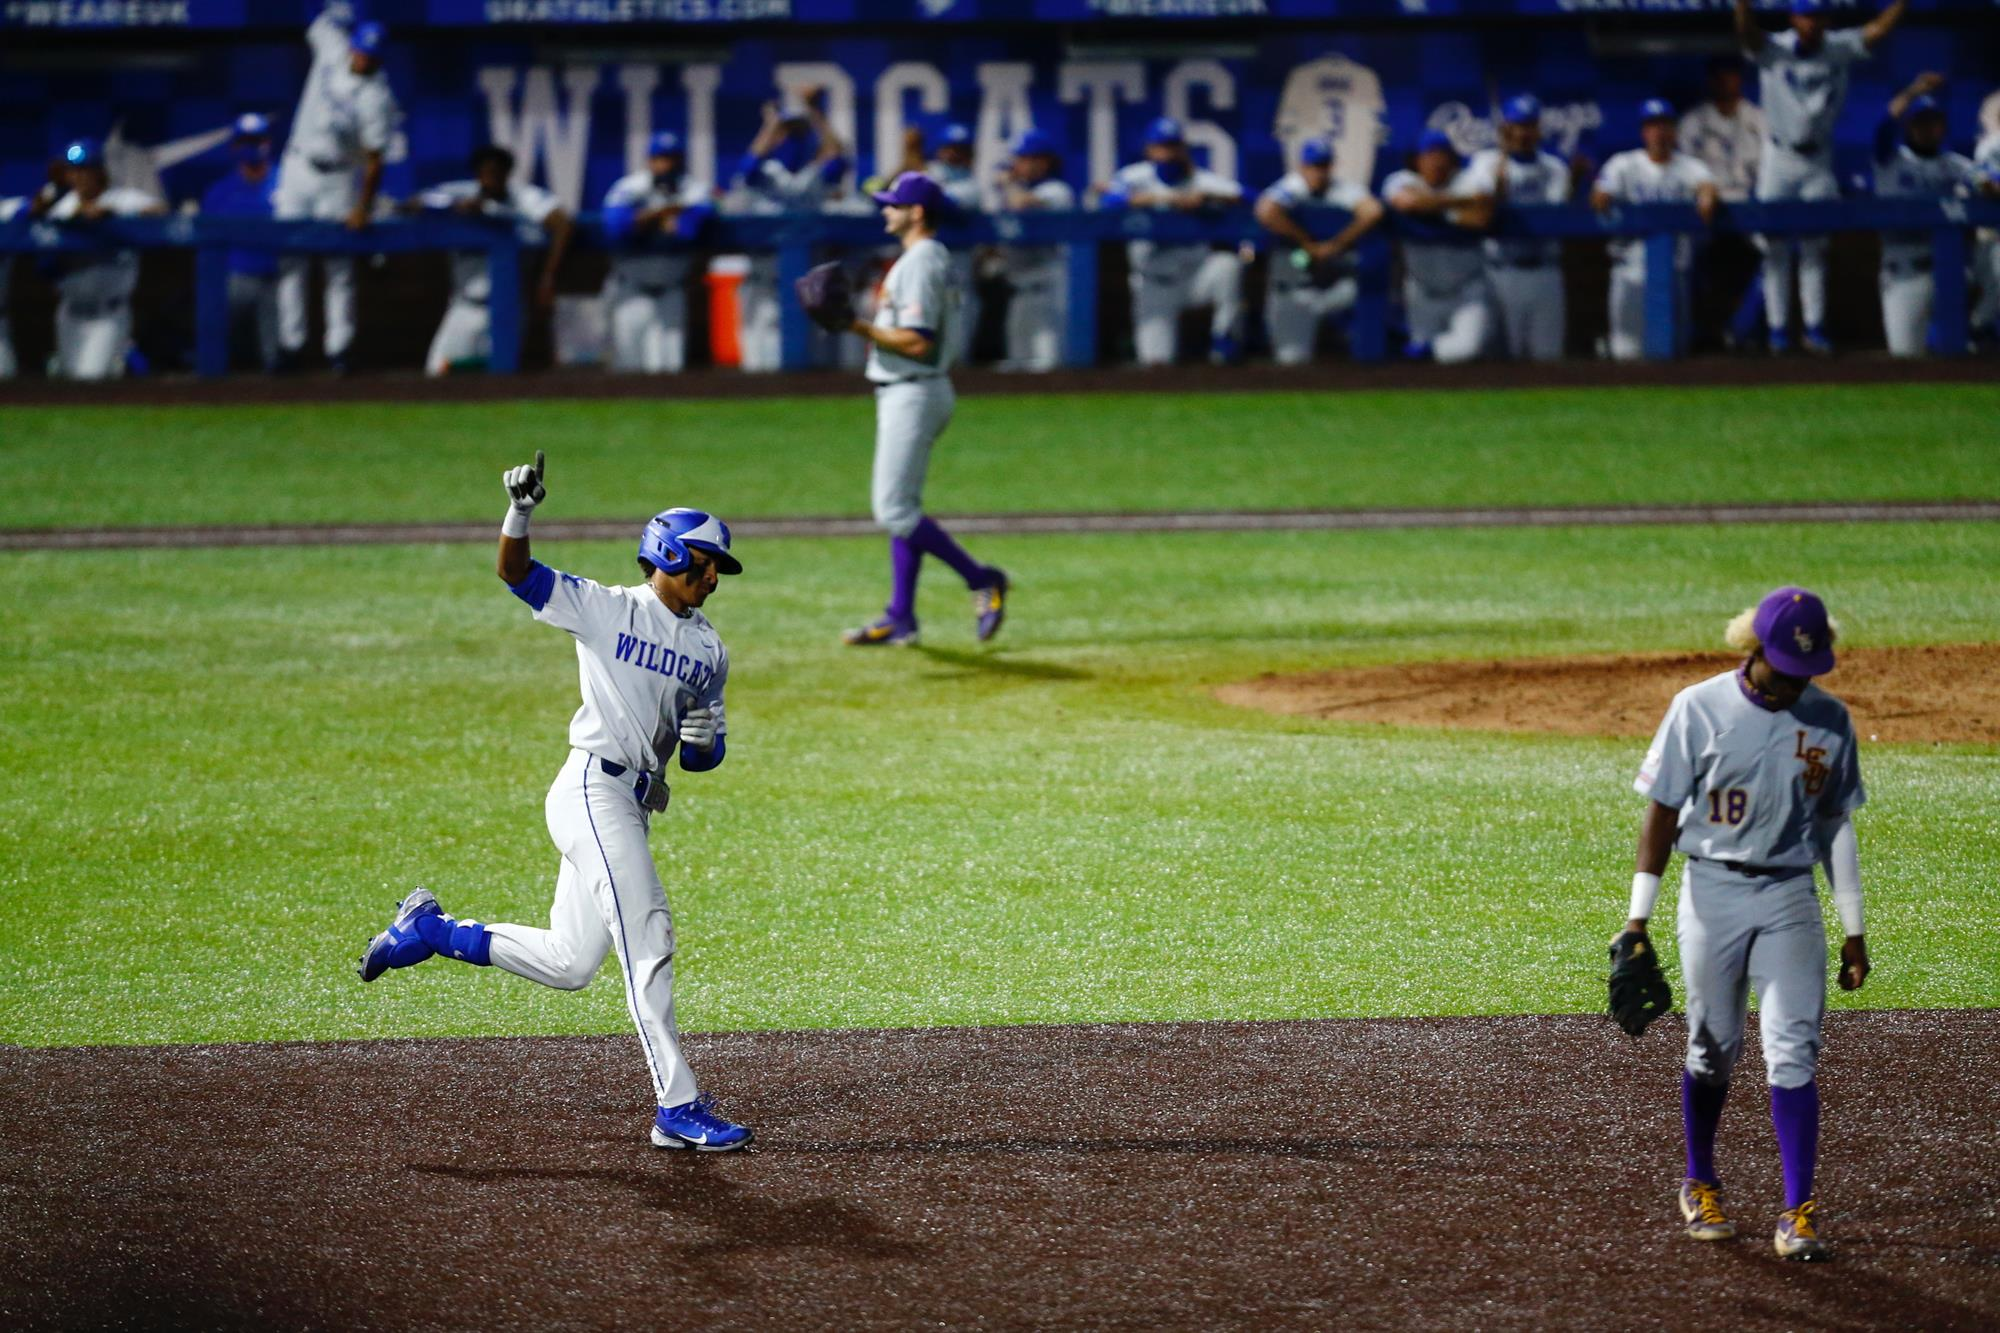 Kentucky Baseball: LSU Offense Attacks in Series-Opening Win